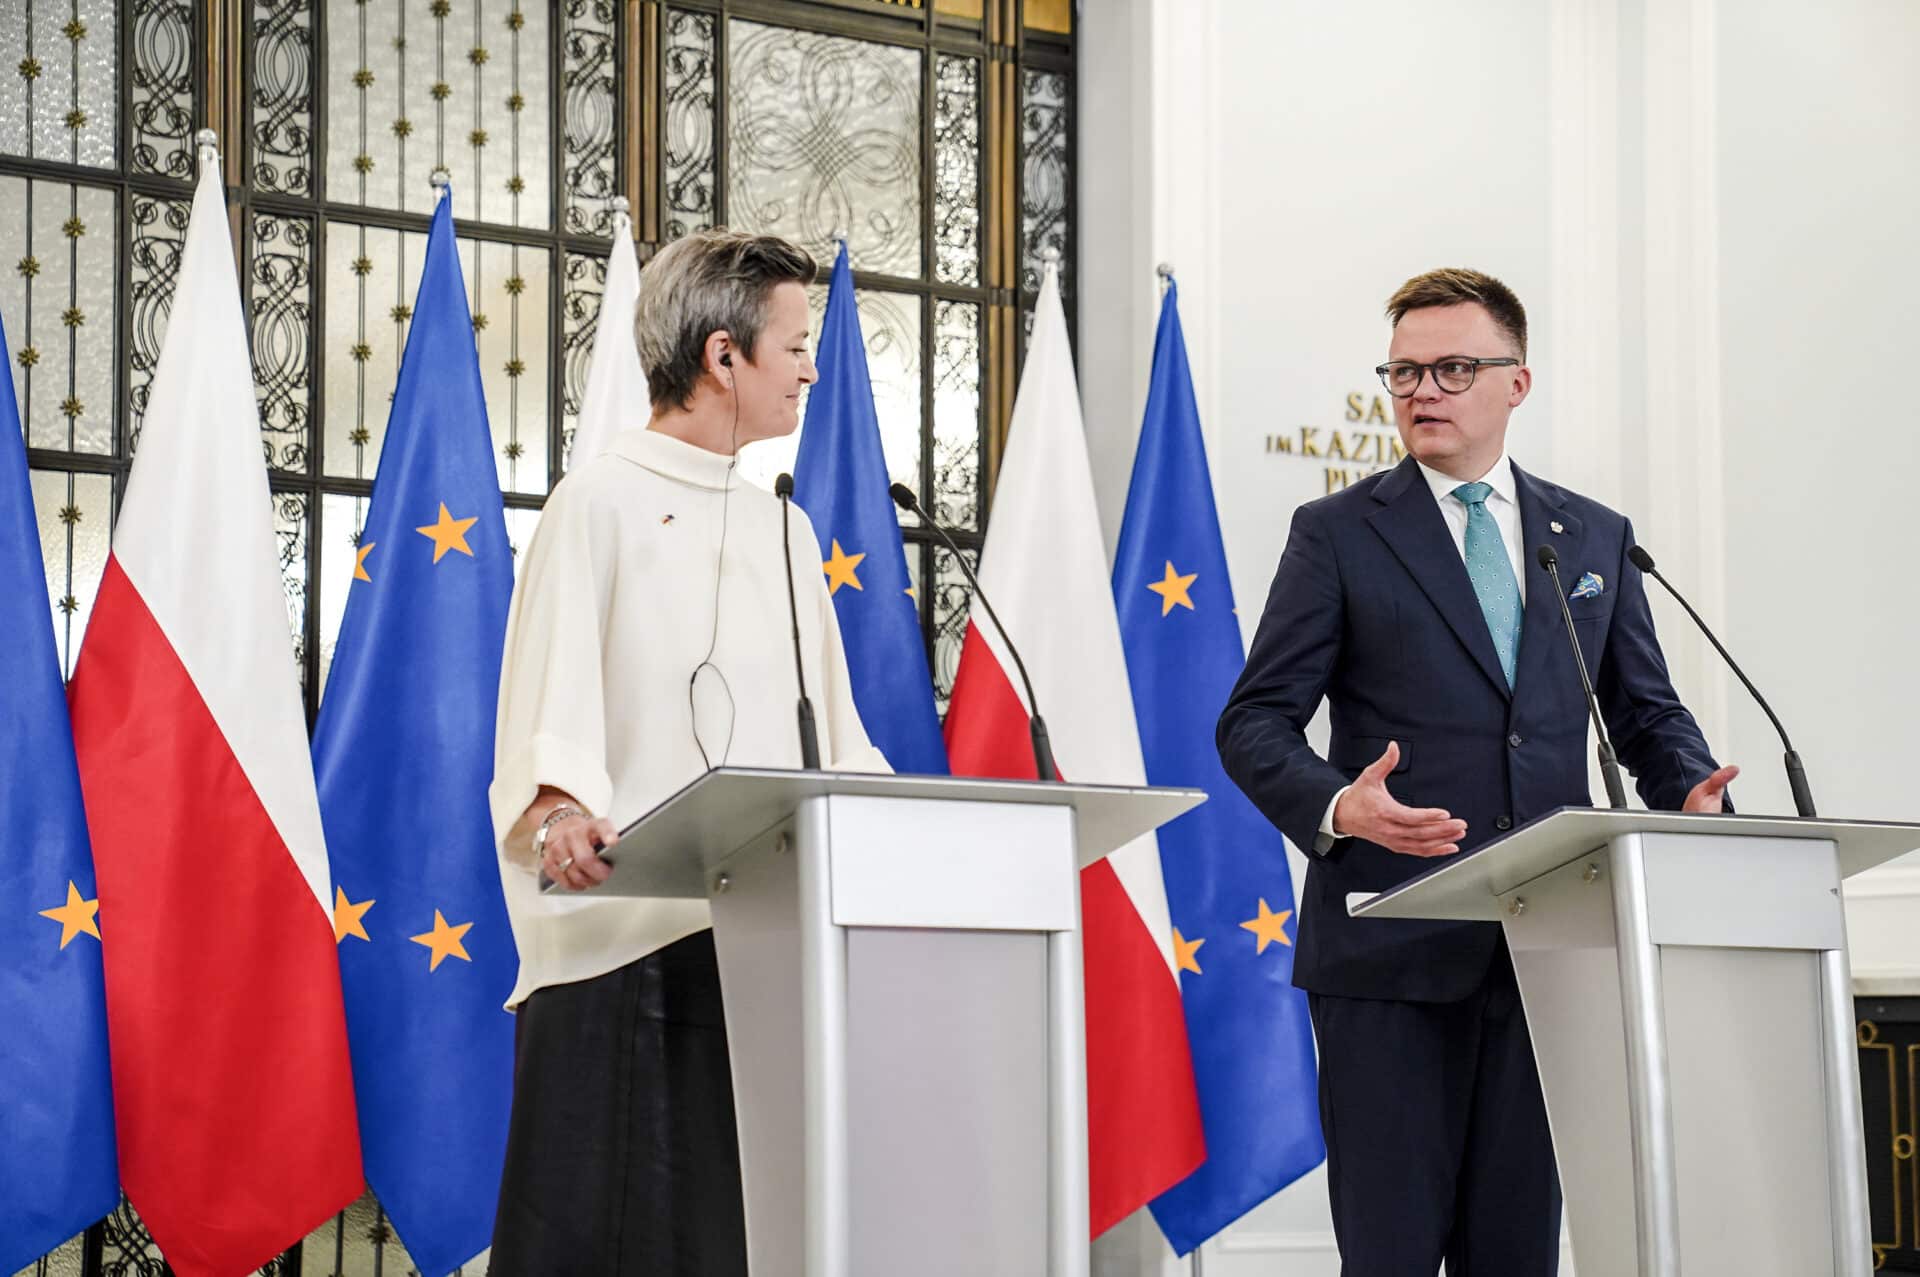 Sejm Speaker Hołownia and EC Vice-President Vestager